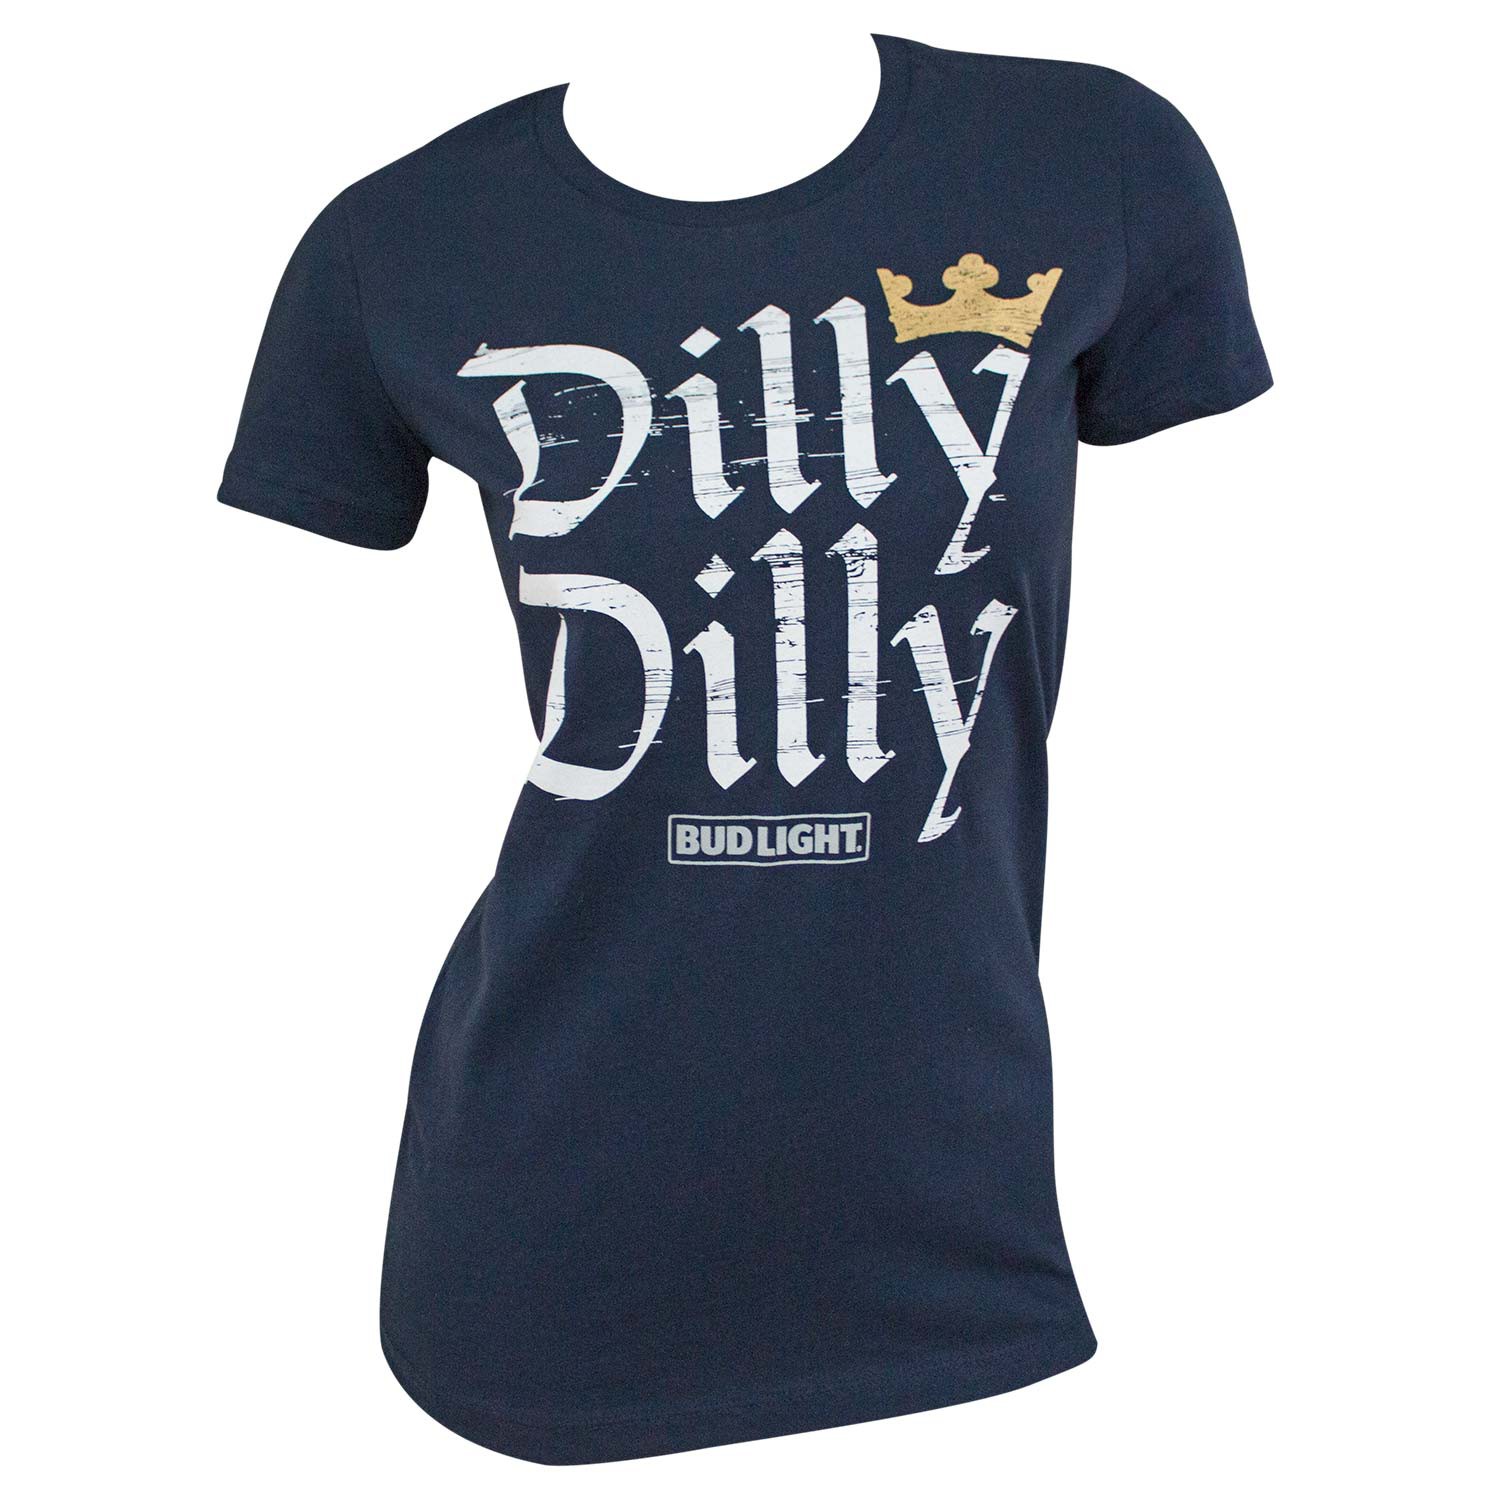 Bud Light Dilly Dilly Navy Blue Women's Tee Shirt